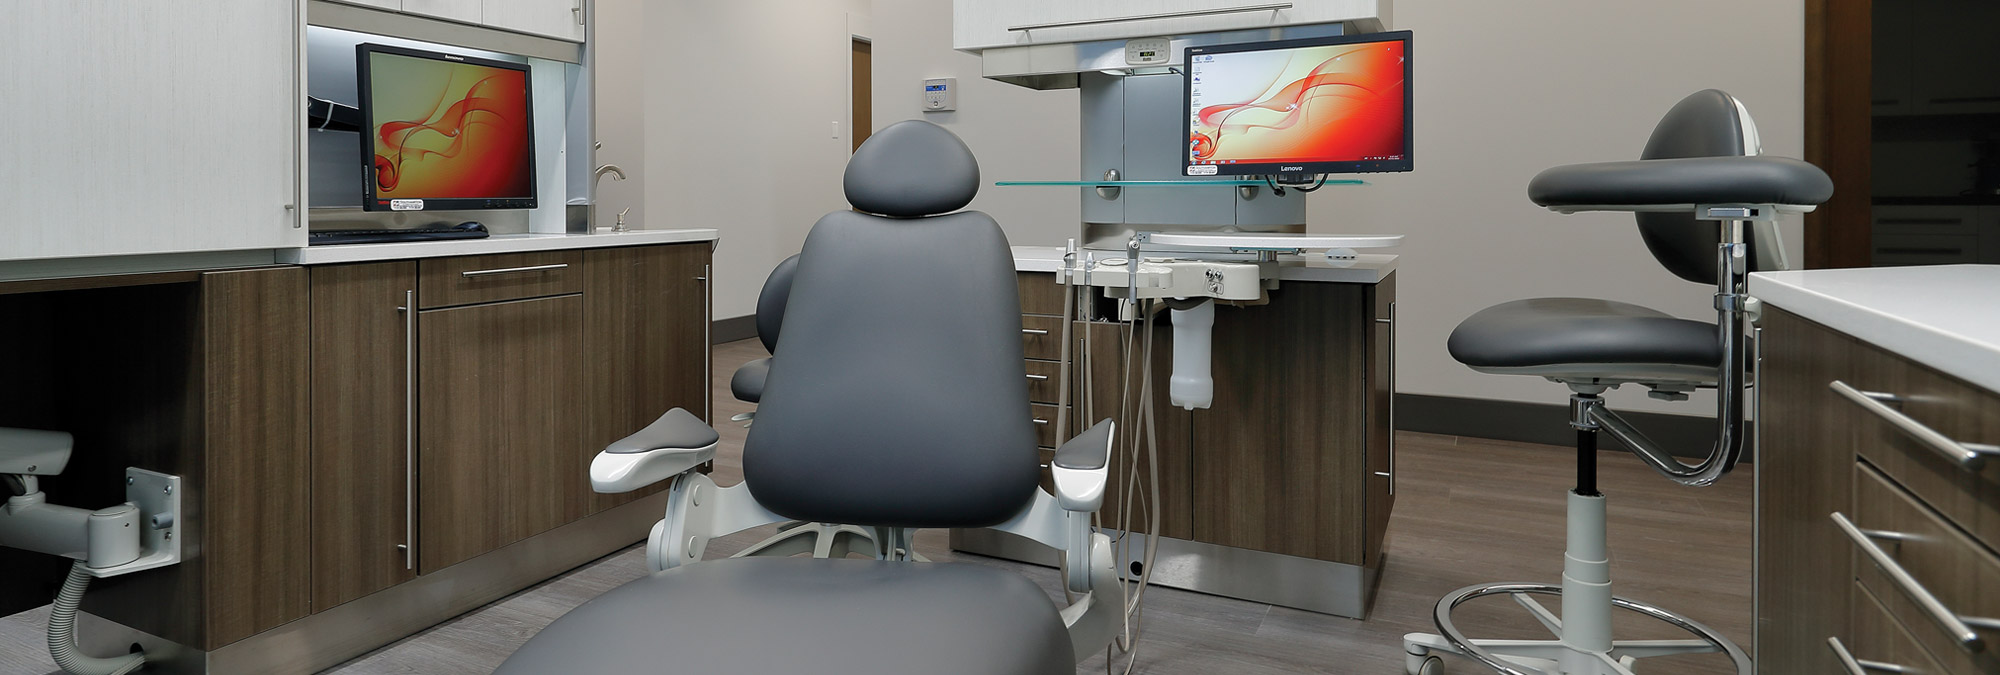 Dental chair in operatory